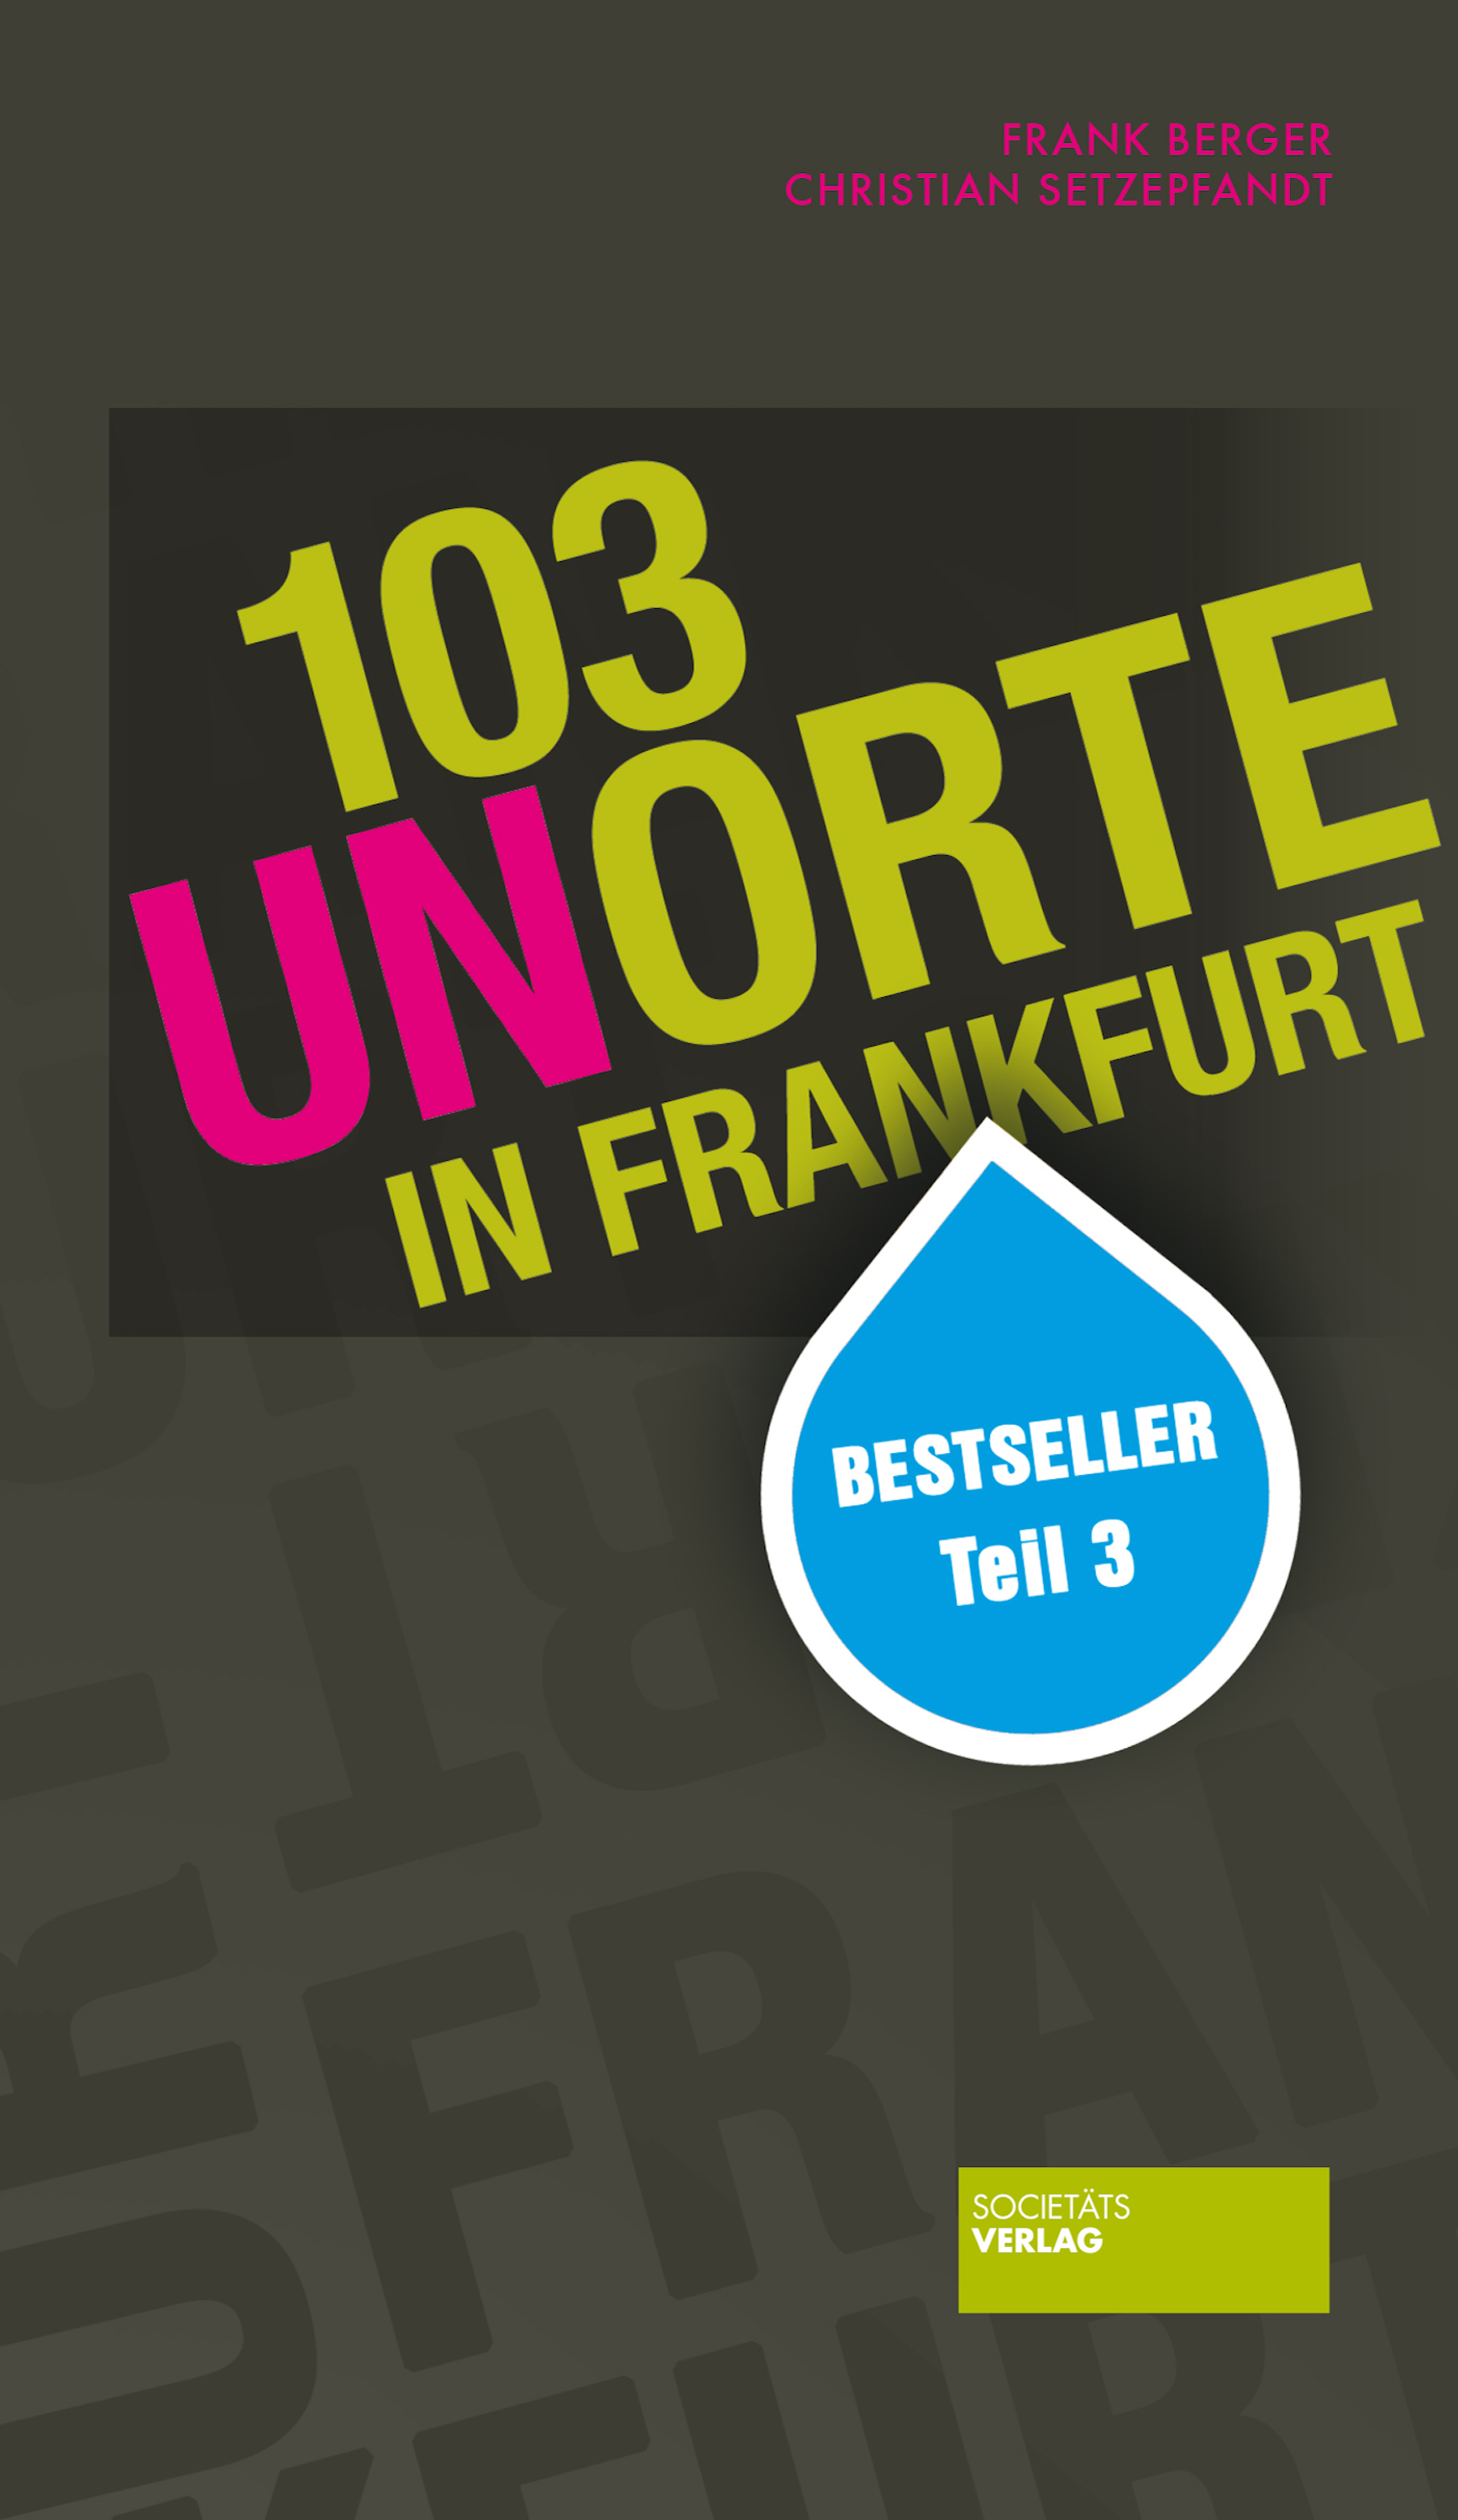 Frank Berger 103 Unorte in Frankfurt